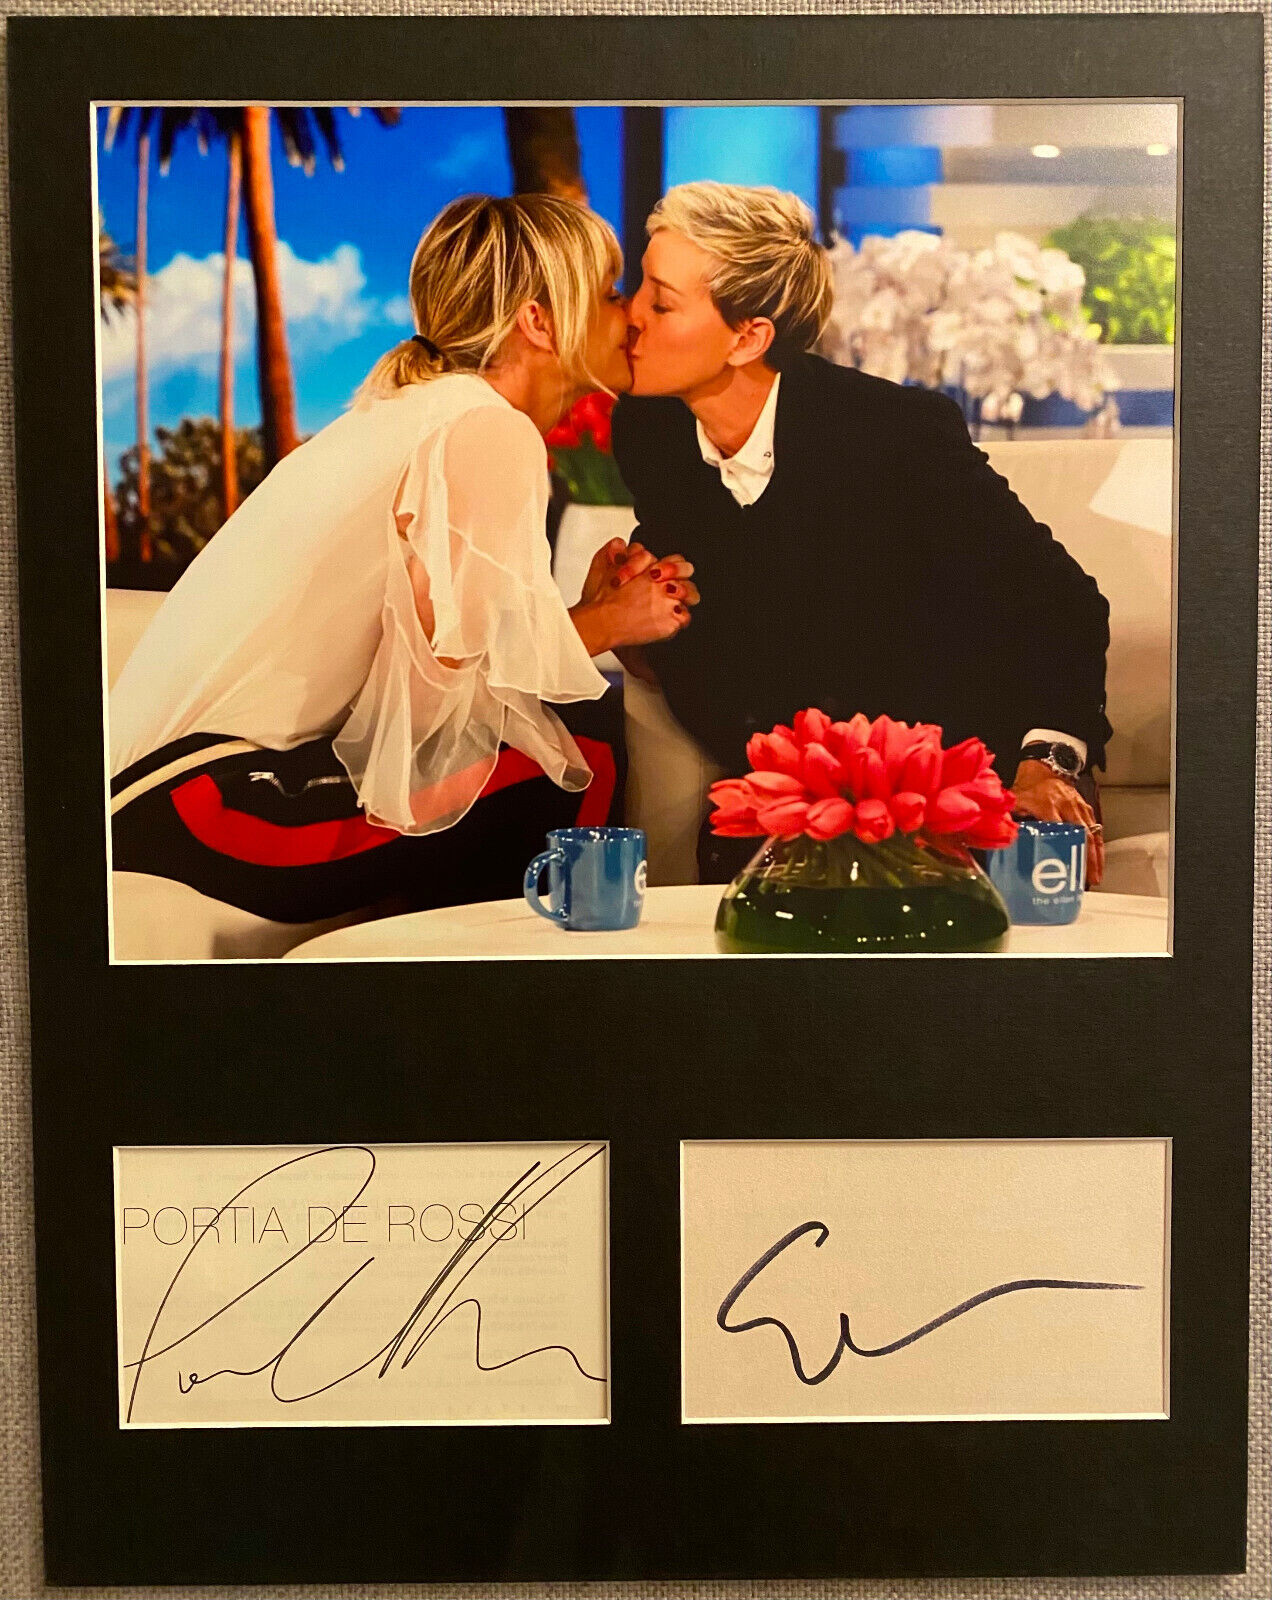 Ellen DeGeneres & Portia de Rossi Signed Autograph Photo Poster painting Display - Authentic